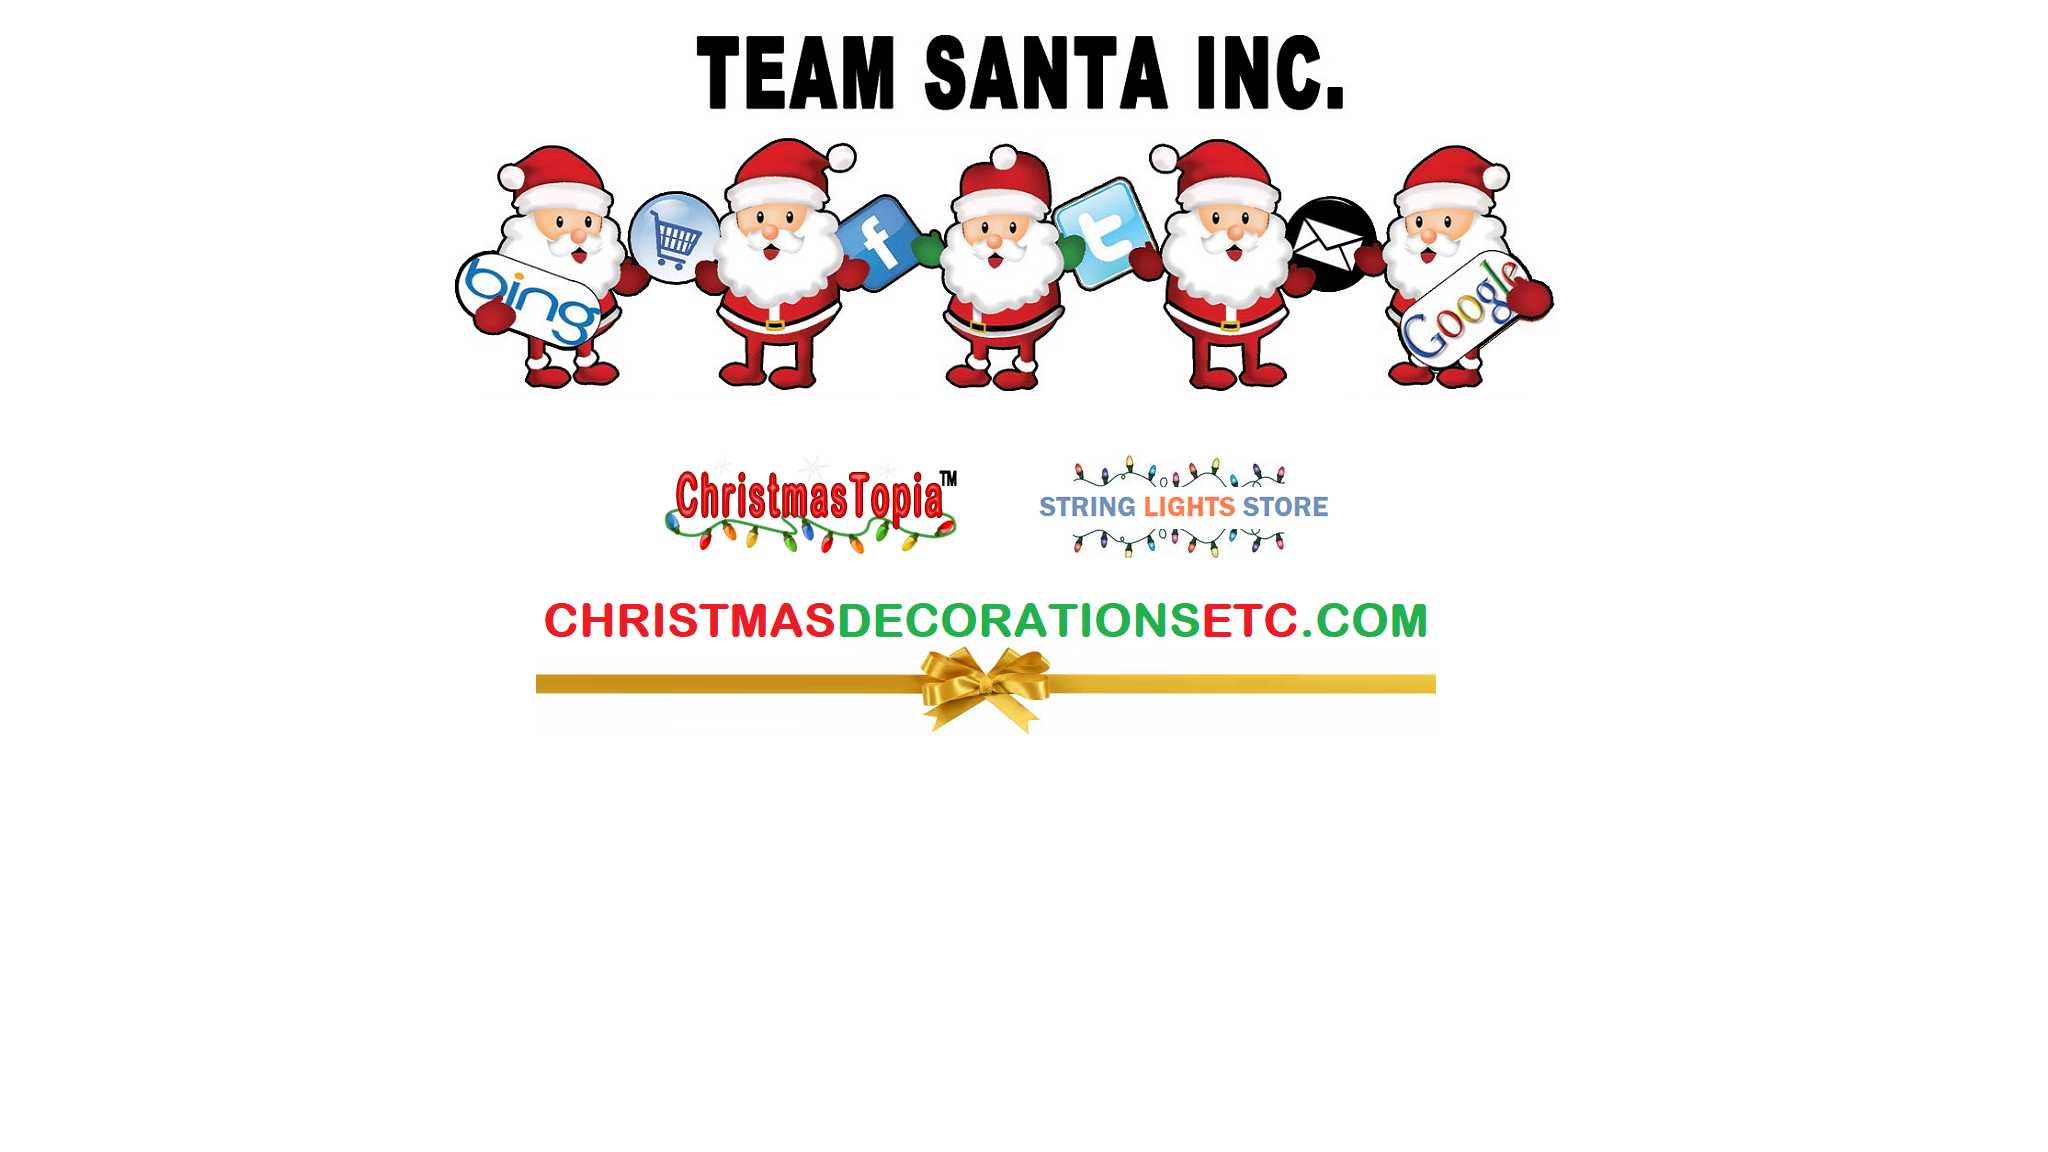 Team Santa Inc presents YouTube Channel Team Santa Inc. com